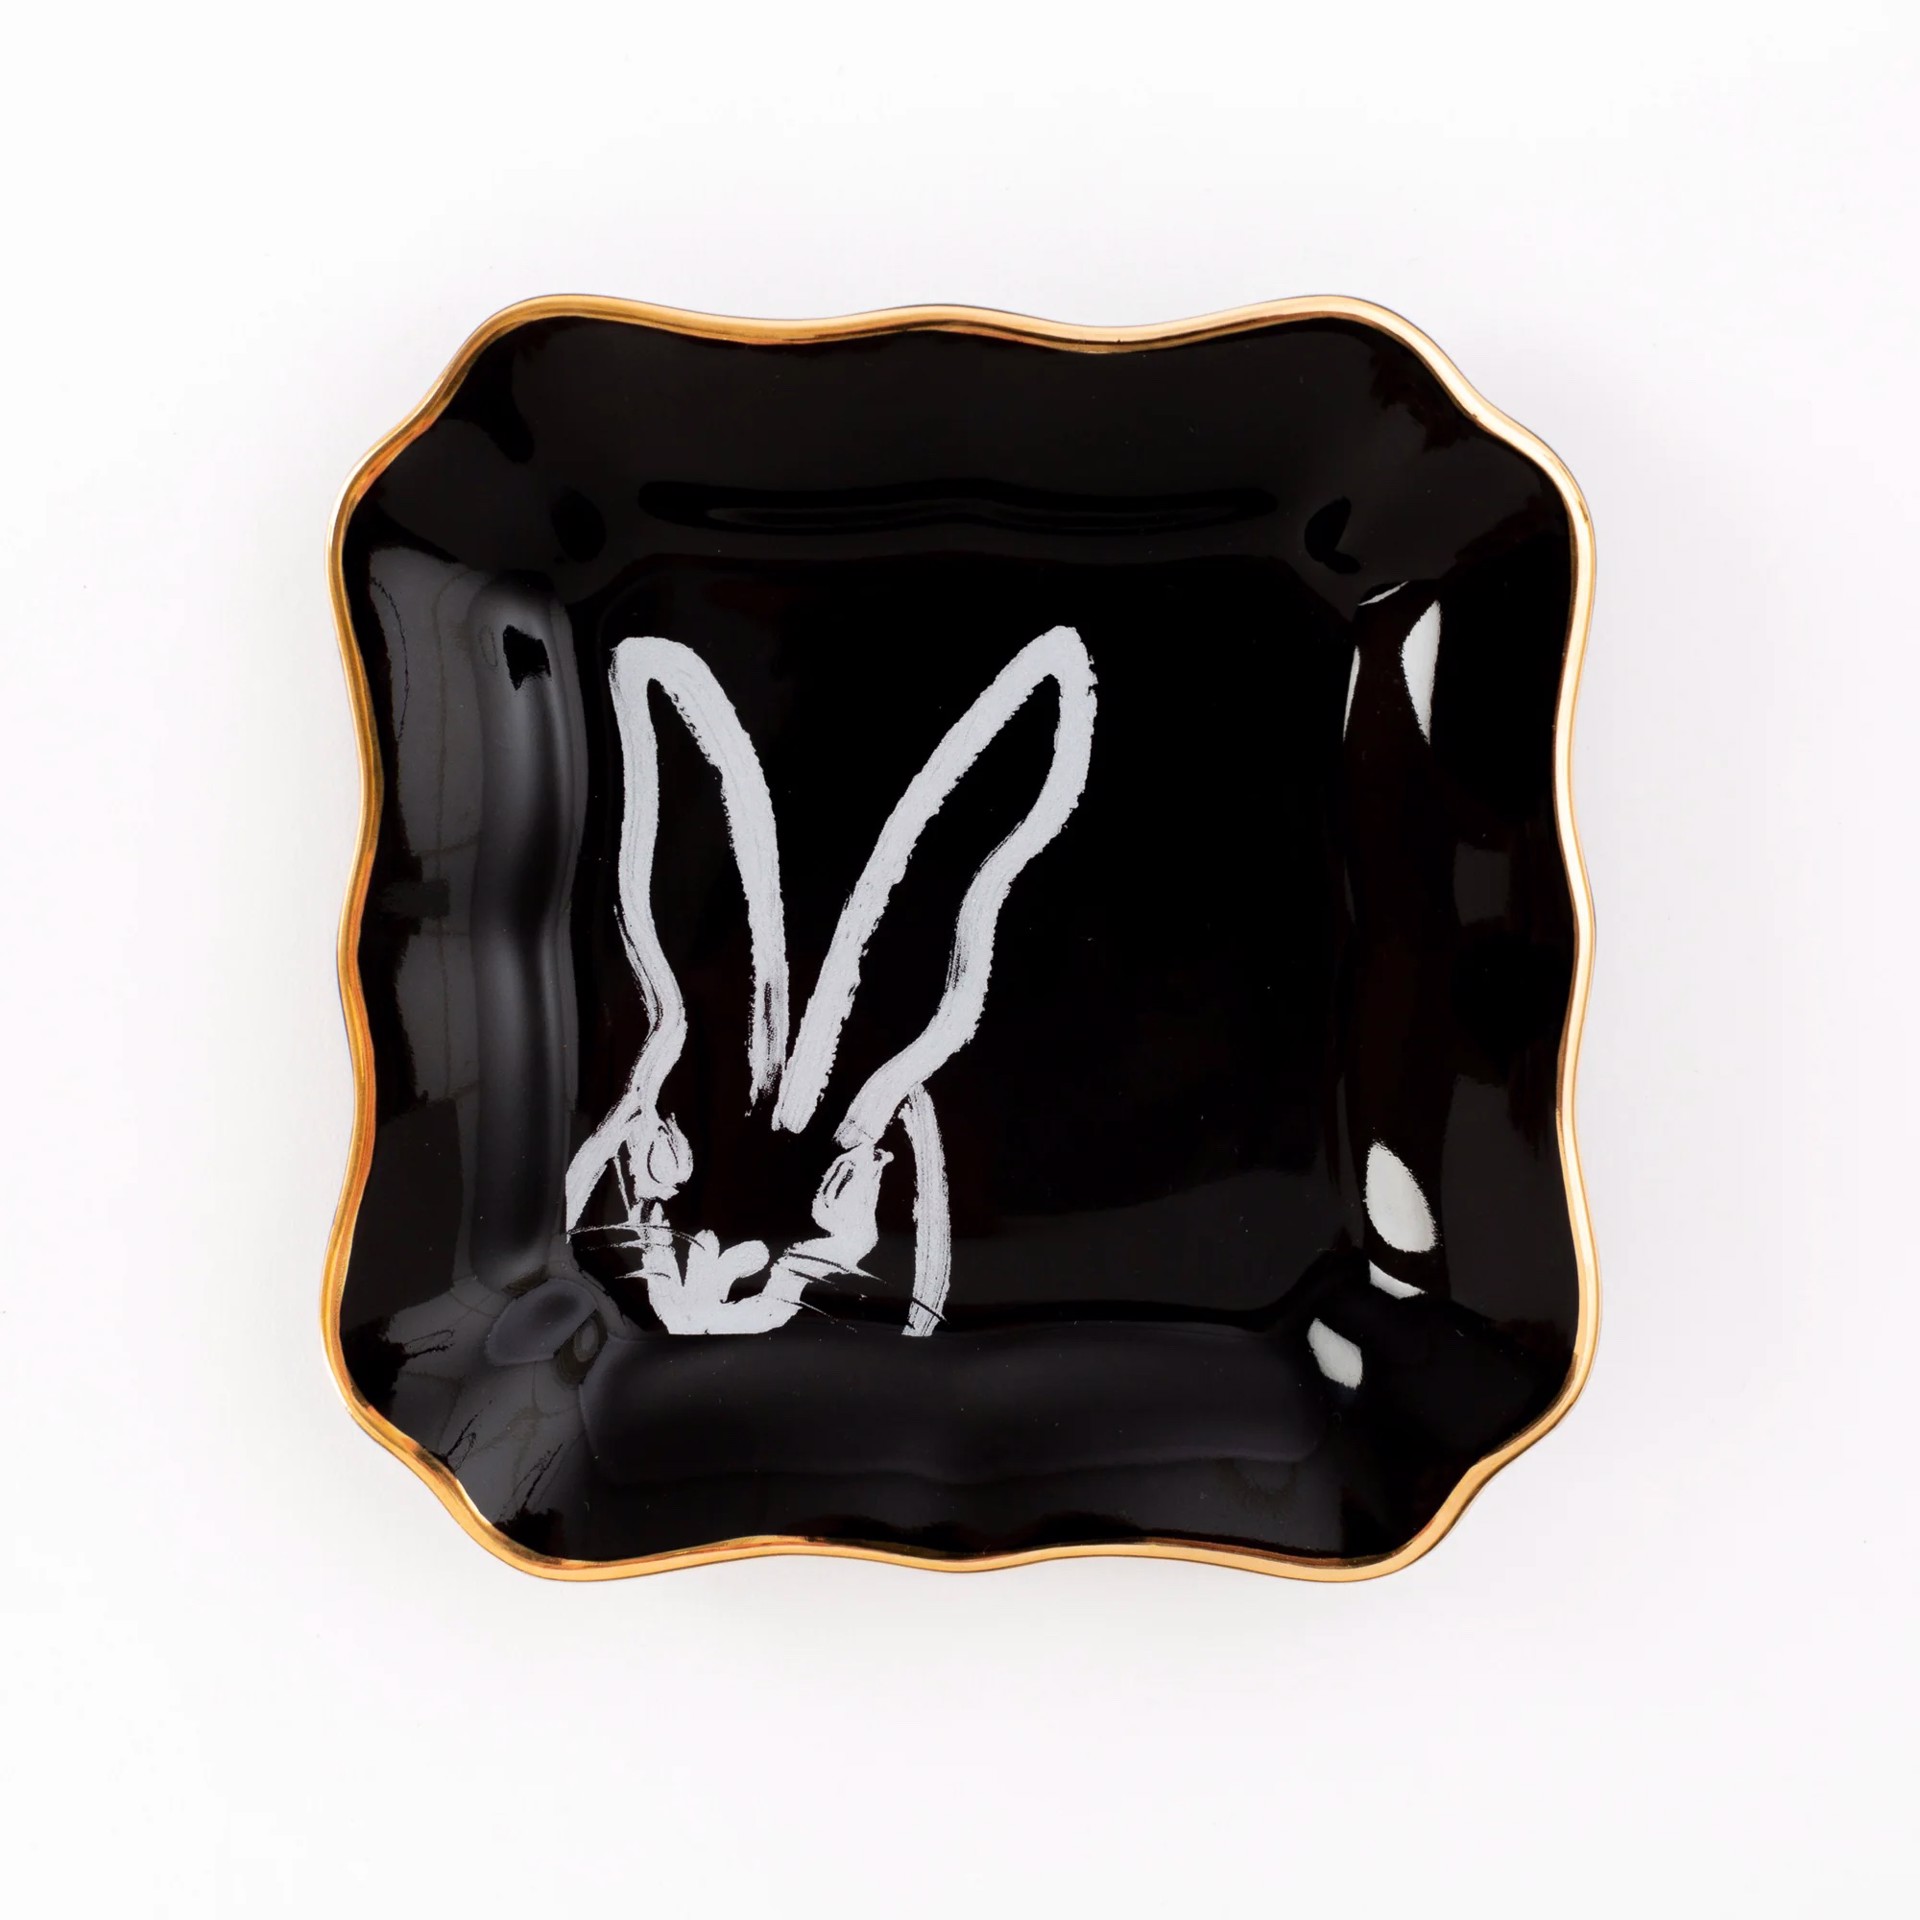 Bunny Portrait Plate - Black with Hand Painted Gold Rim by Hunt Slonem (Hop Up Shop)